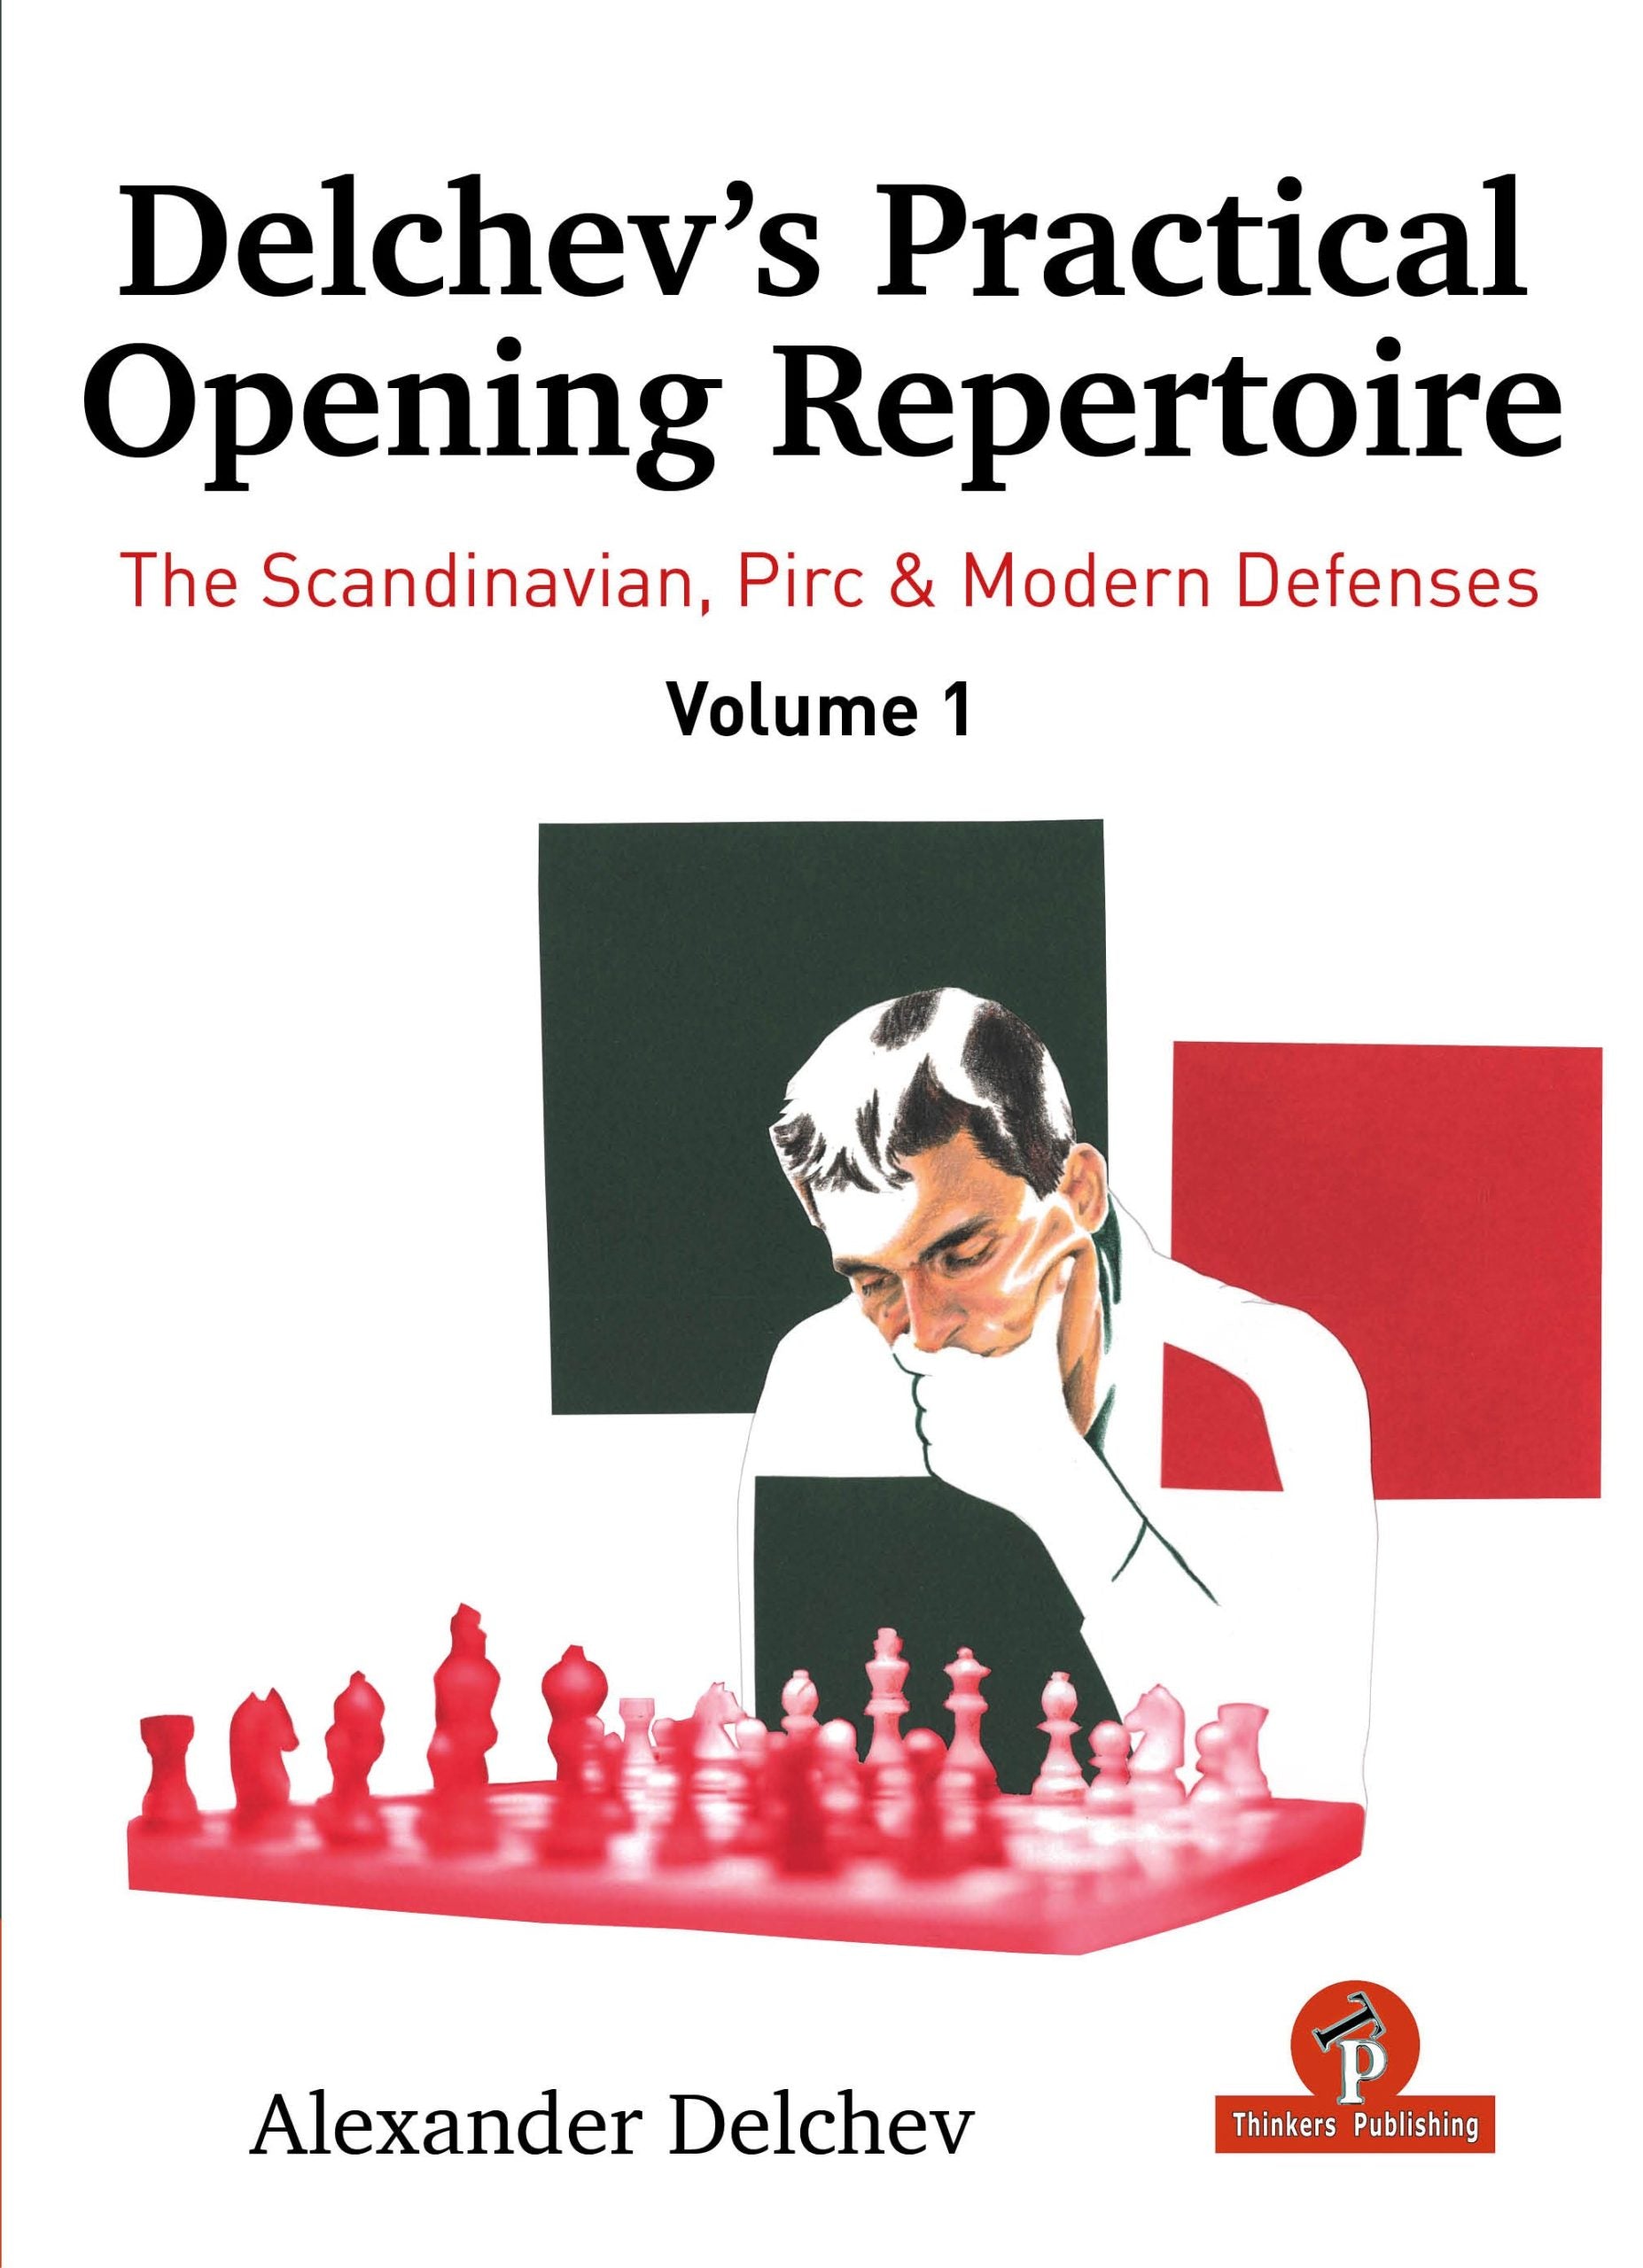 Delchev: Delchev’s Practical Opening Repertoire – Volume 1 – The Scandinavian, Pirc & Modern Defenses